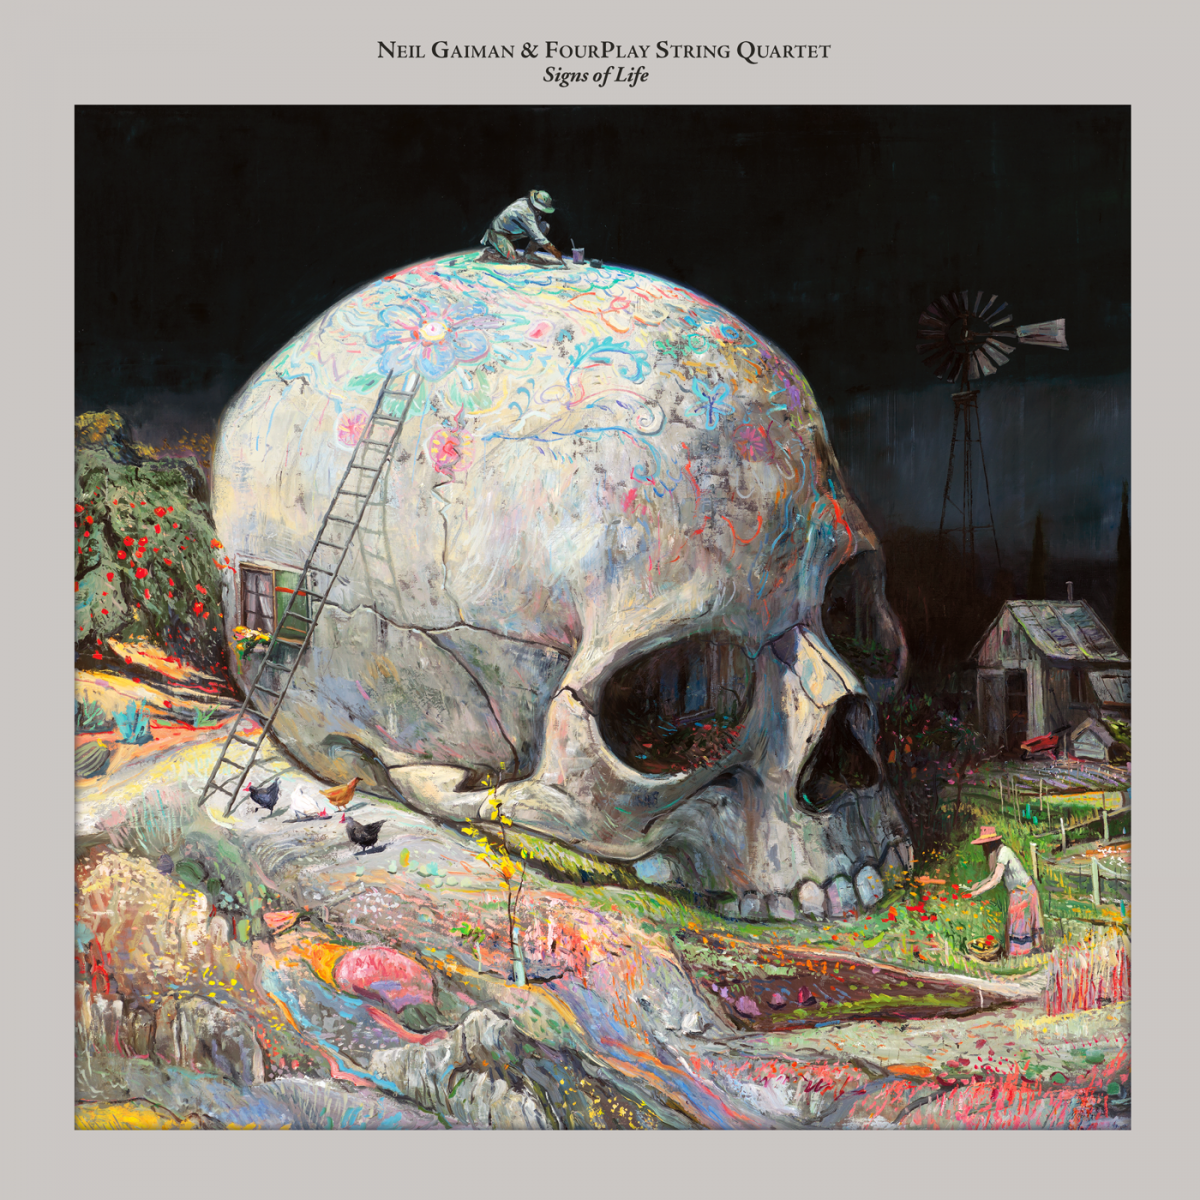 Neil Gaiman & FourPlay String Quartet Signs of Life album art.